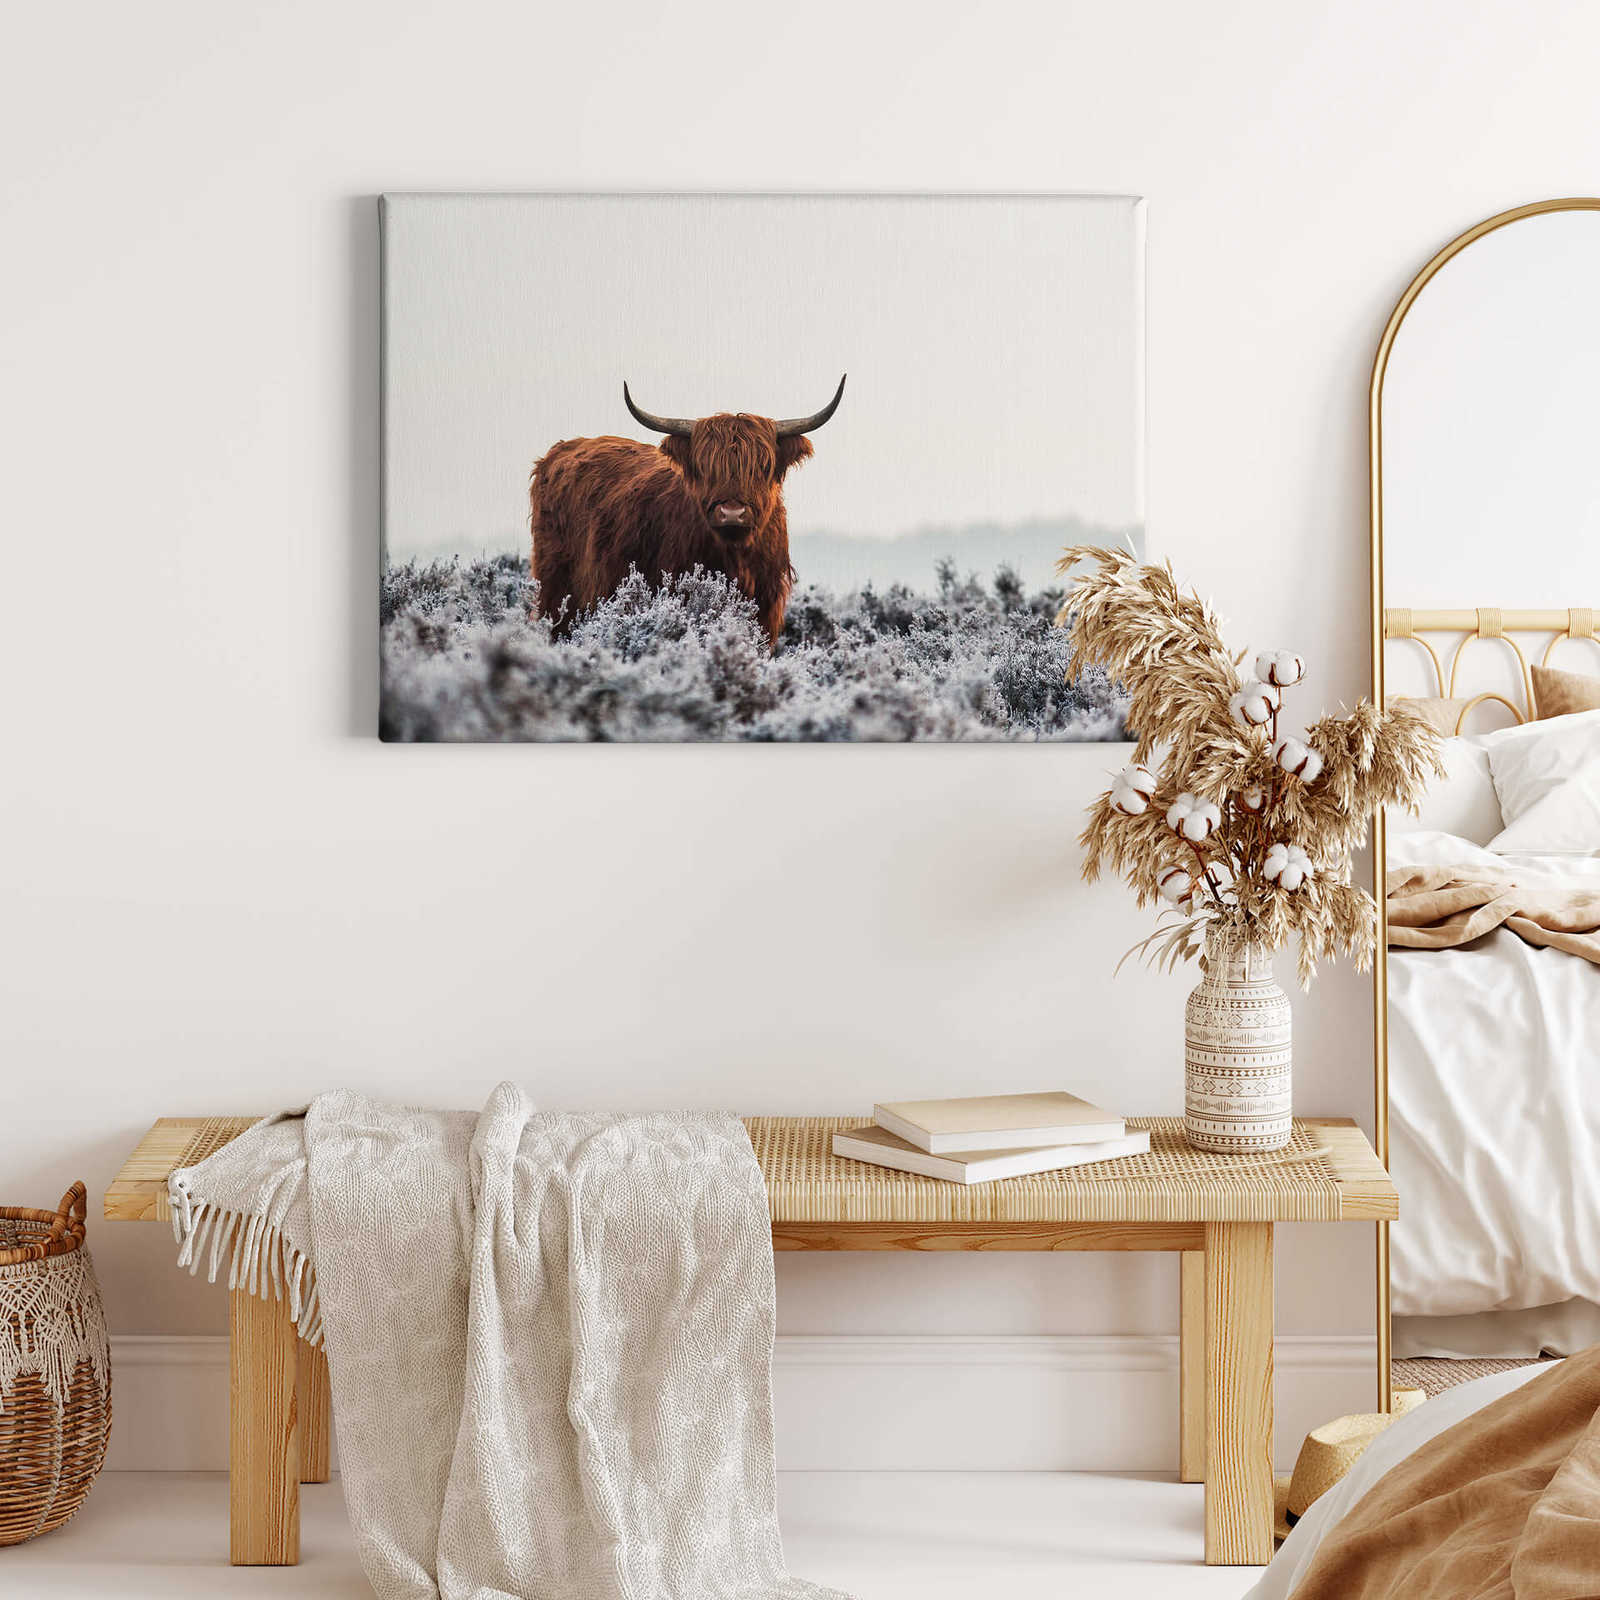             Canvas schilderij Highland Cattle, van den Helm foto - 0,70 m x 0,50 m
        